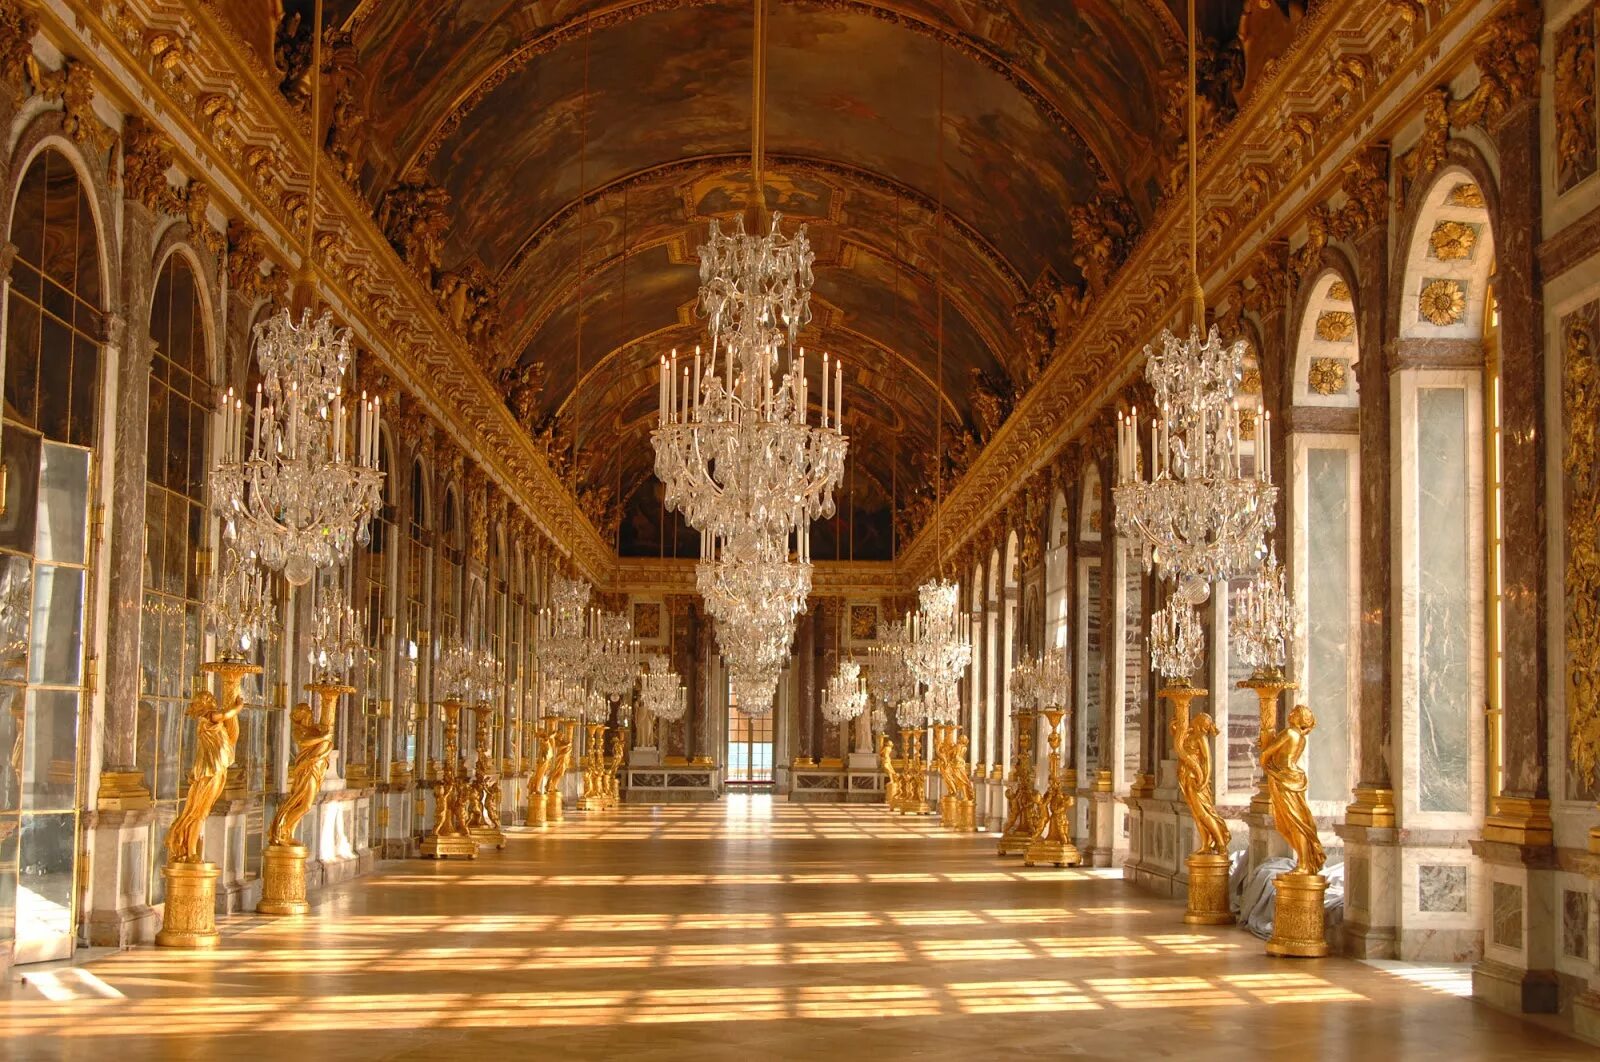 Версальский дворец, Версаль дворец Версаля. Версальский дворец Барокко. Версальский дворец Анфилада залов. Зеркальная галерея Версальского дворца.